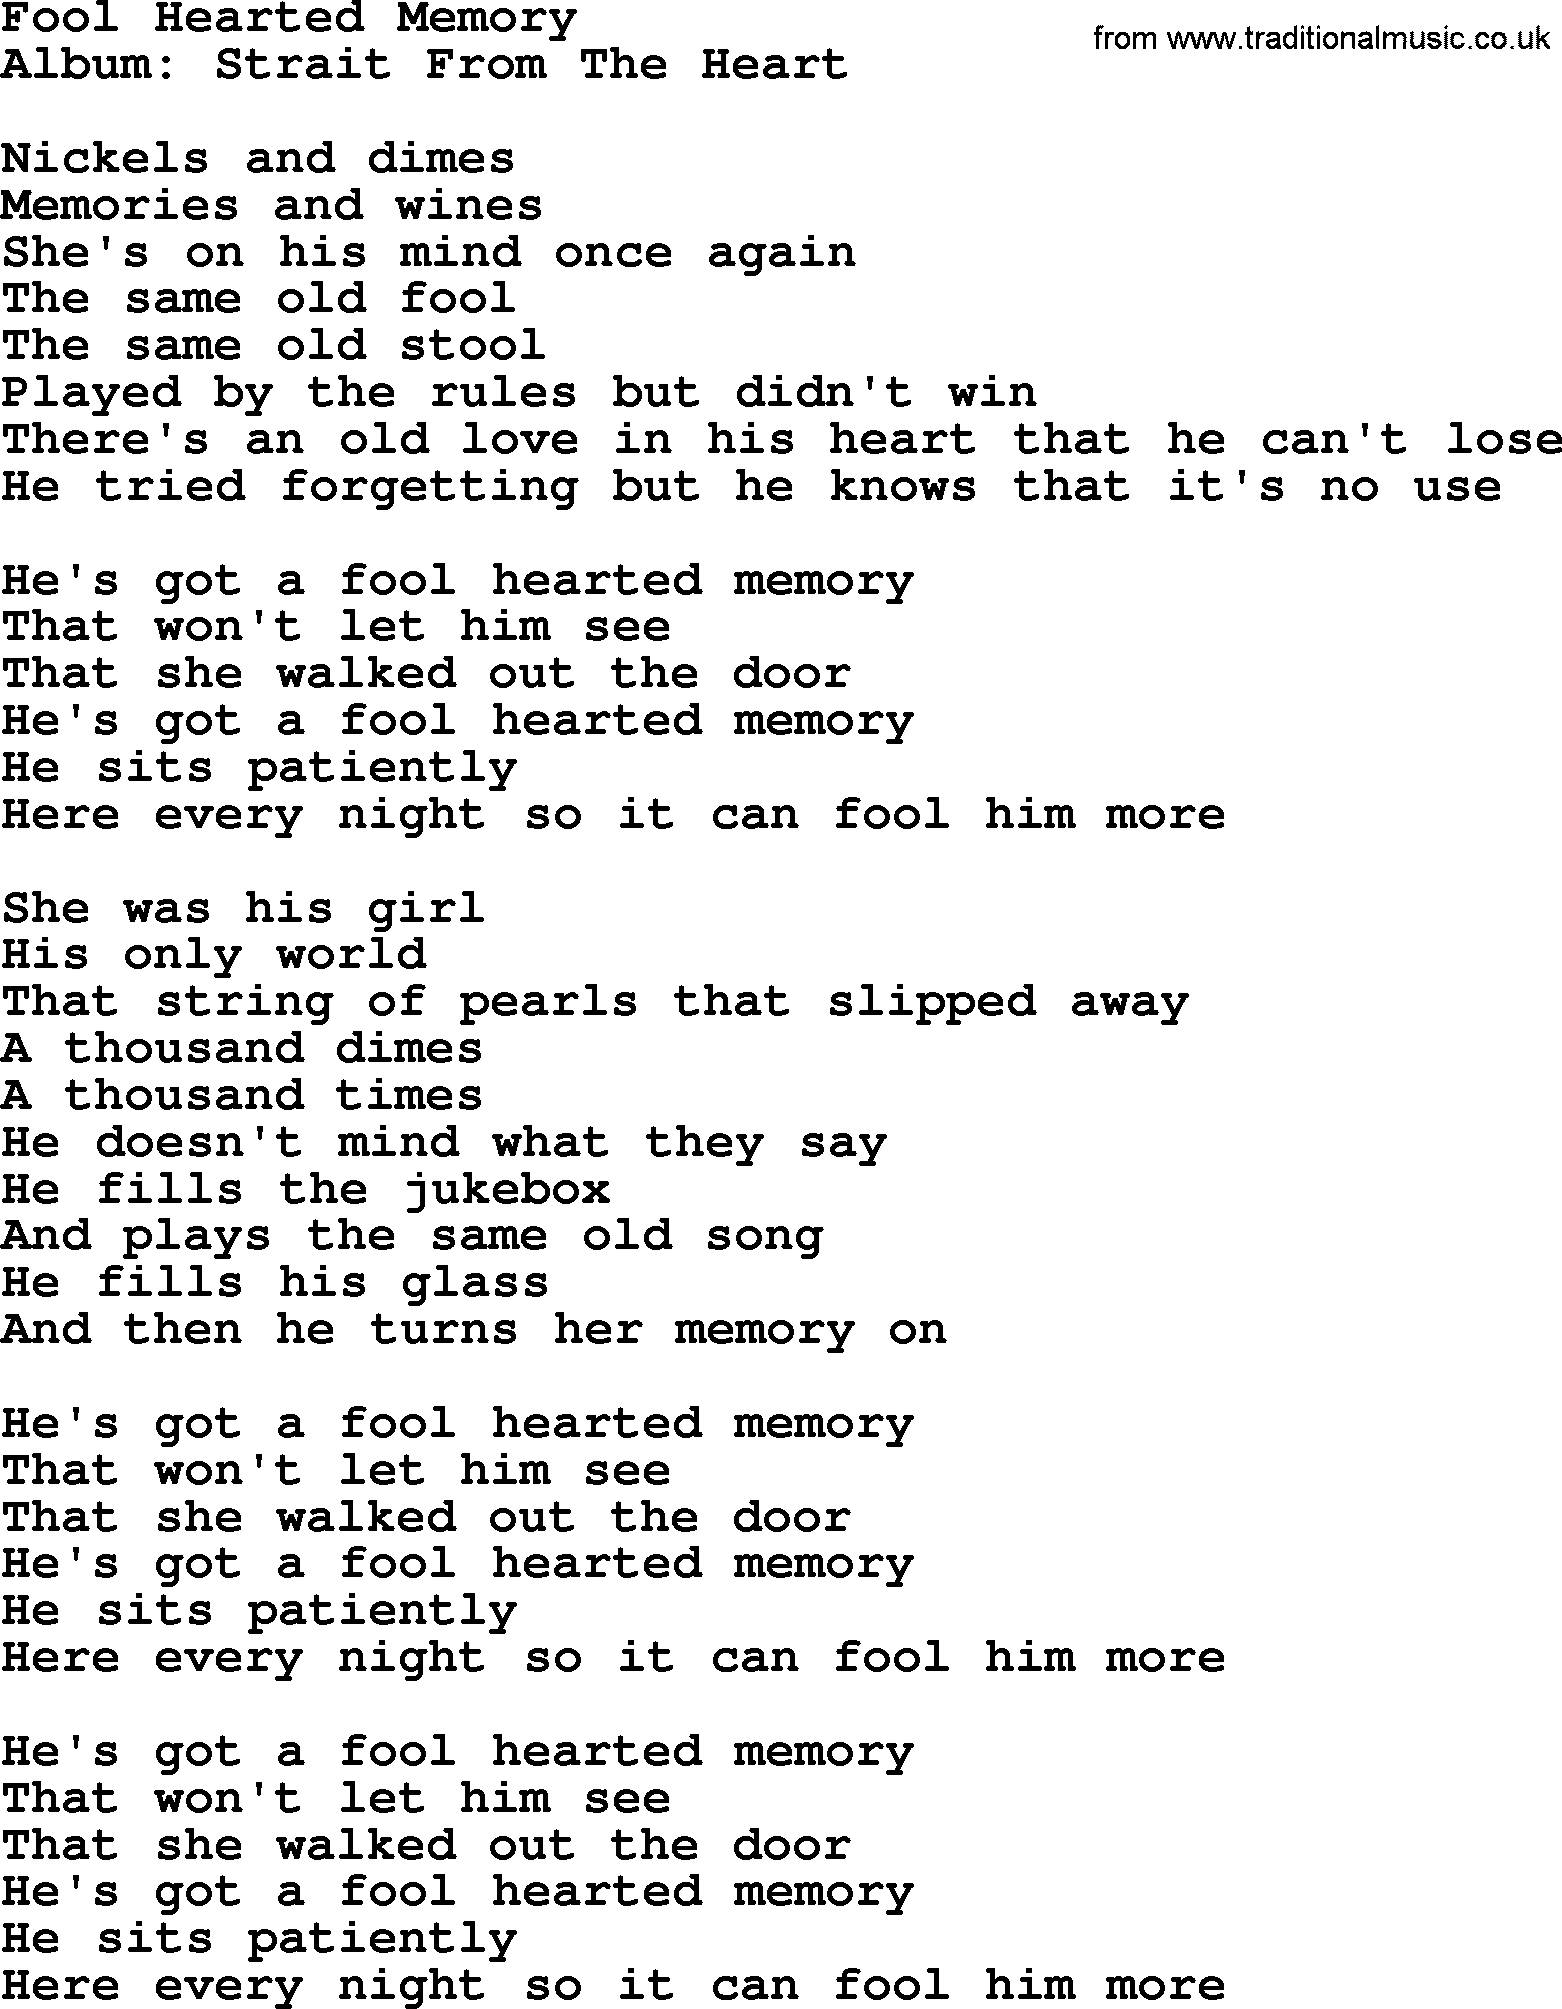 George Strait song: Fool Hearted Memory, lyrics